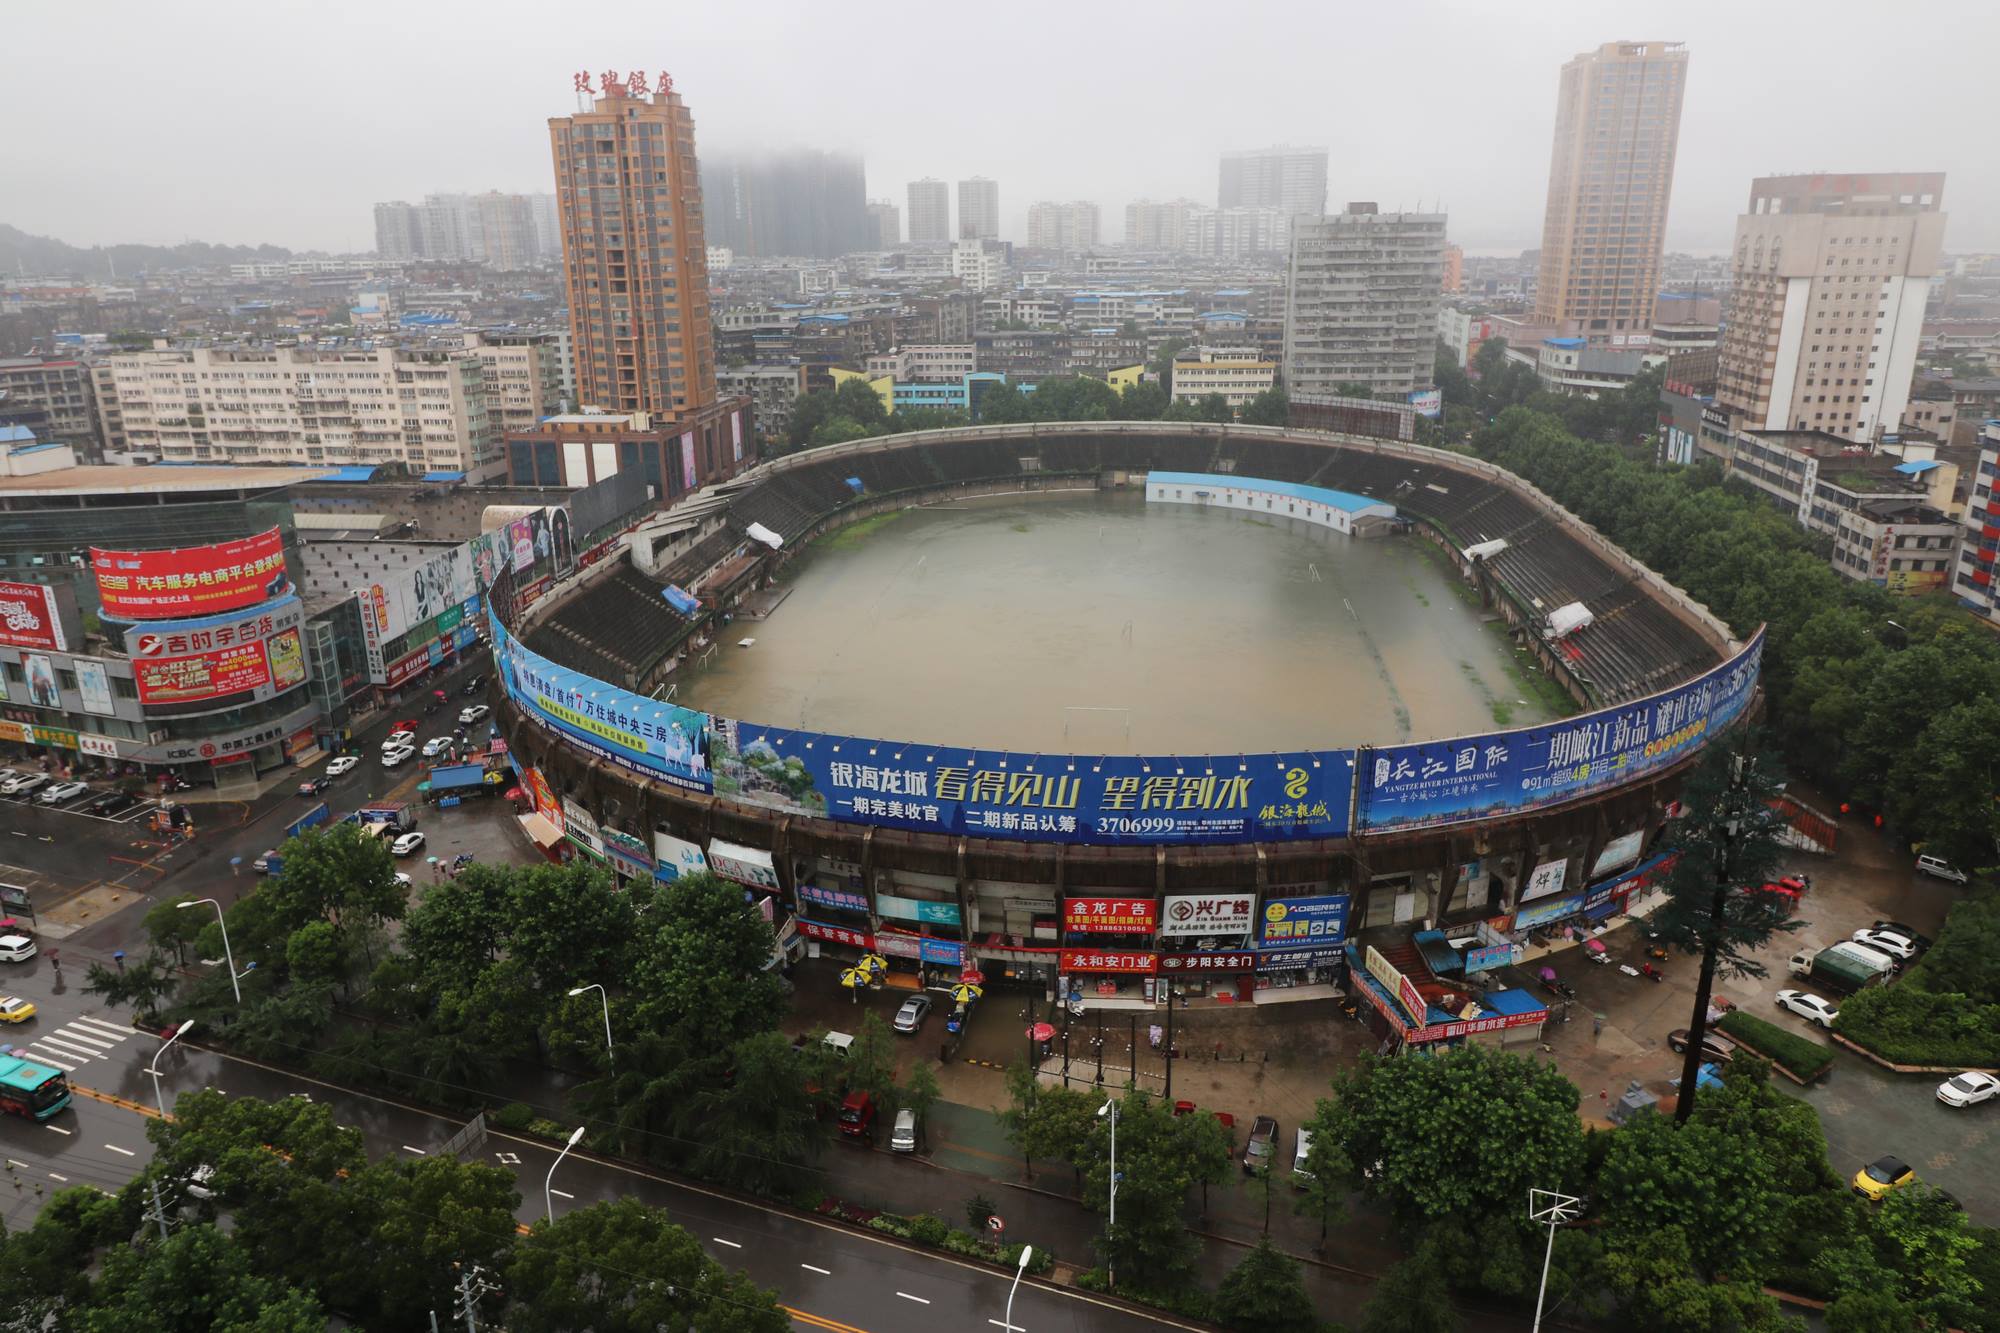 Hujan deras bikin stadion ini jadi kayak baskom isi air, duh!